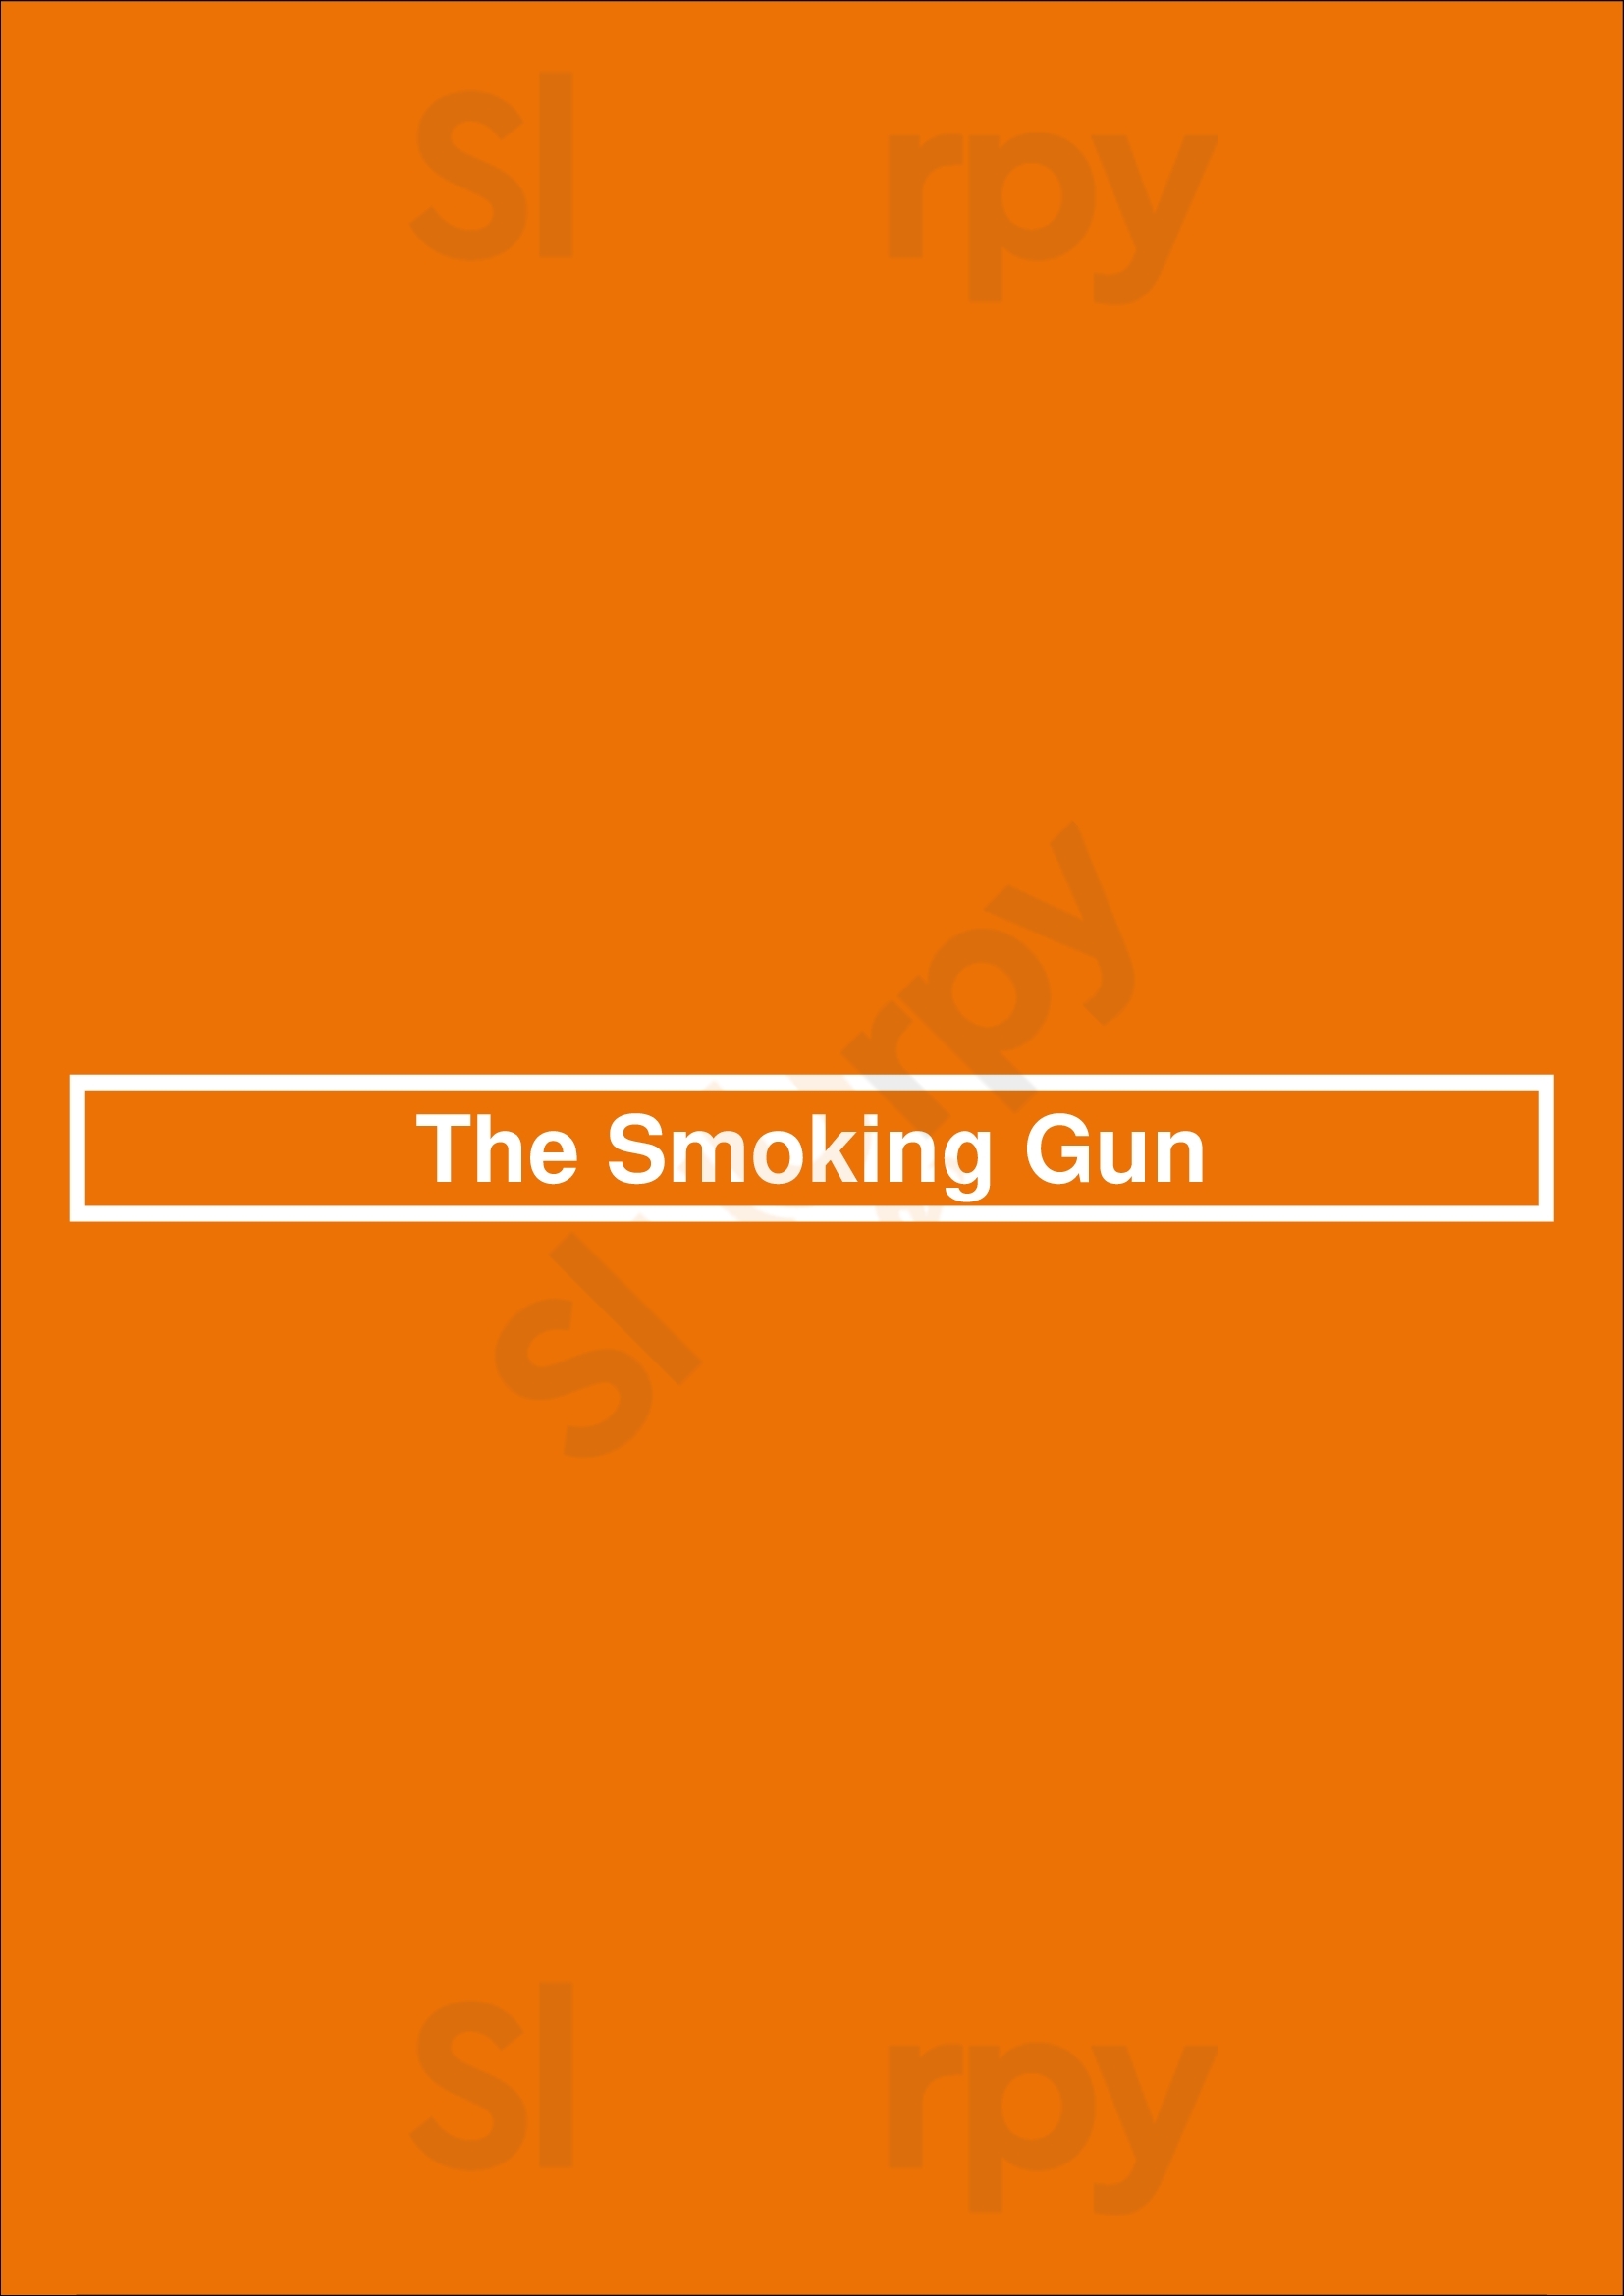 The Smoking Gun San Diego Menu - 1